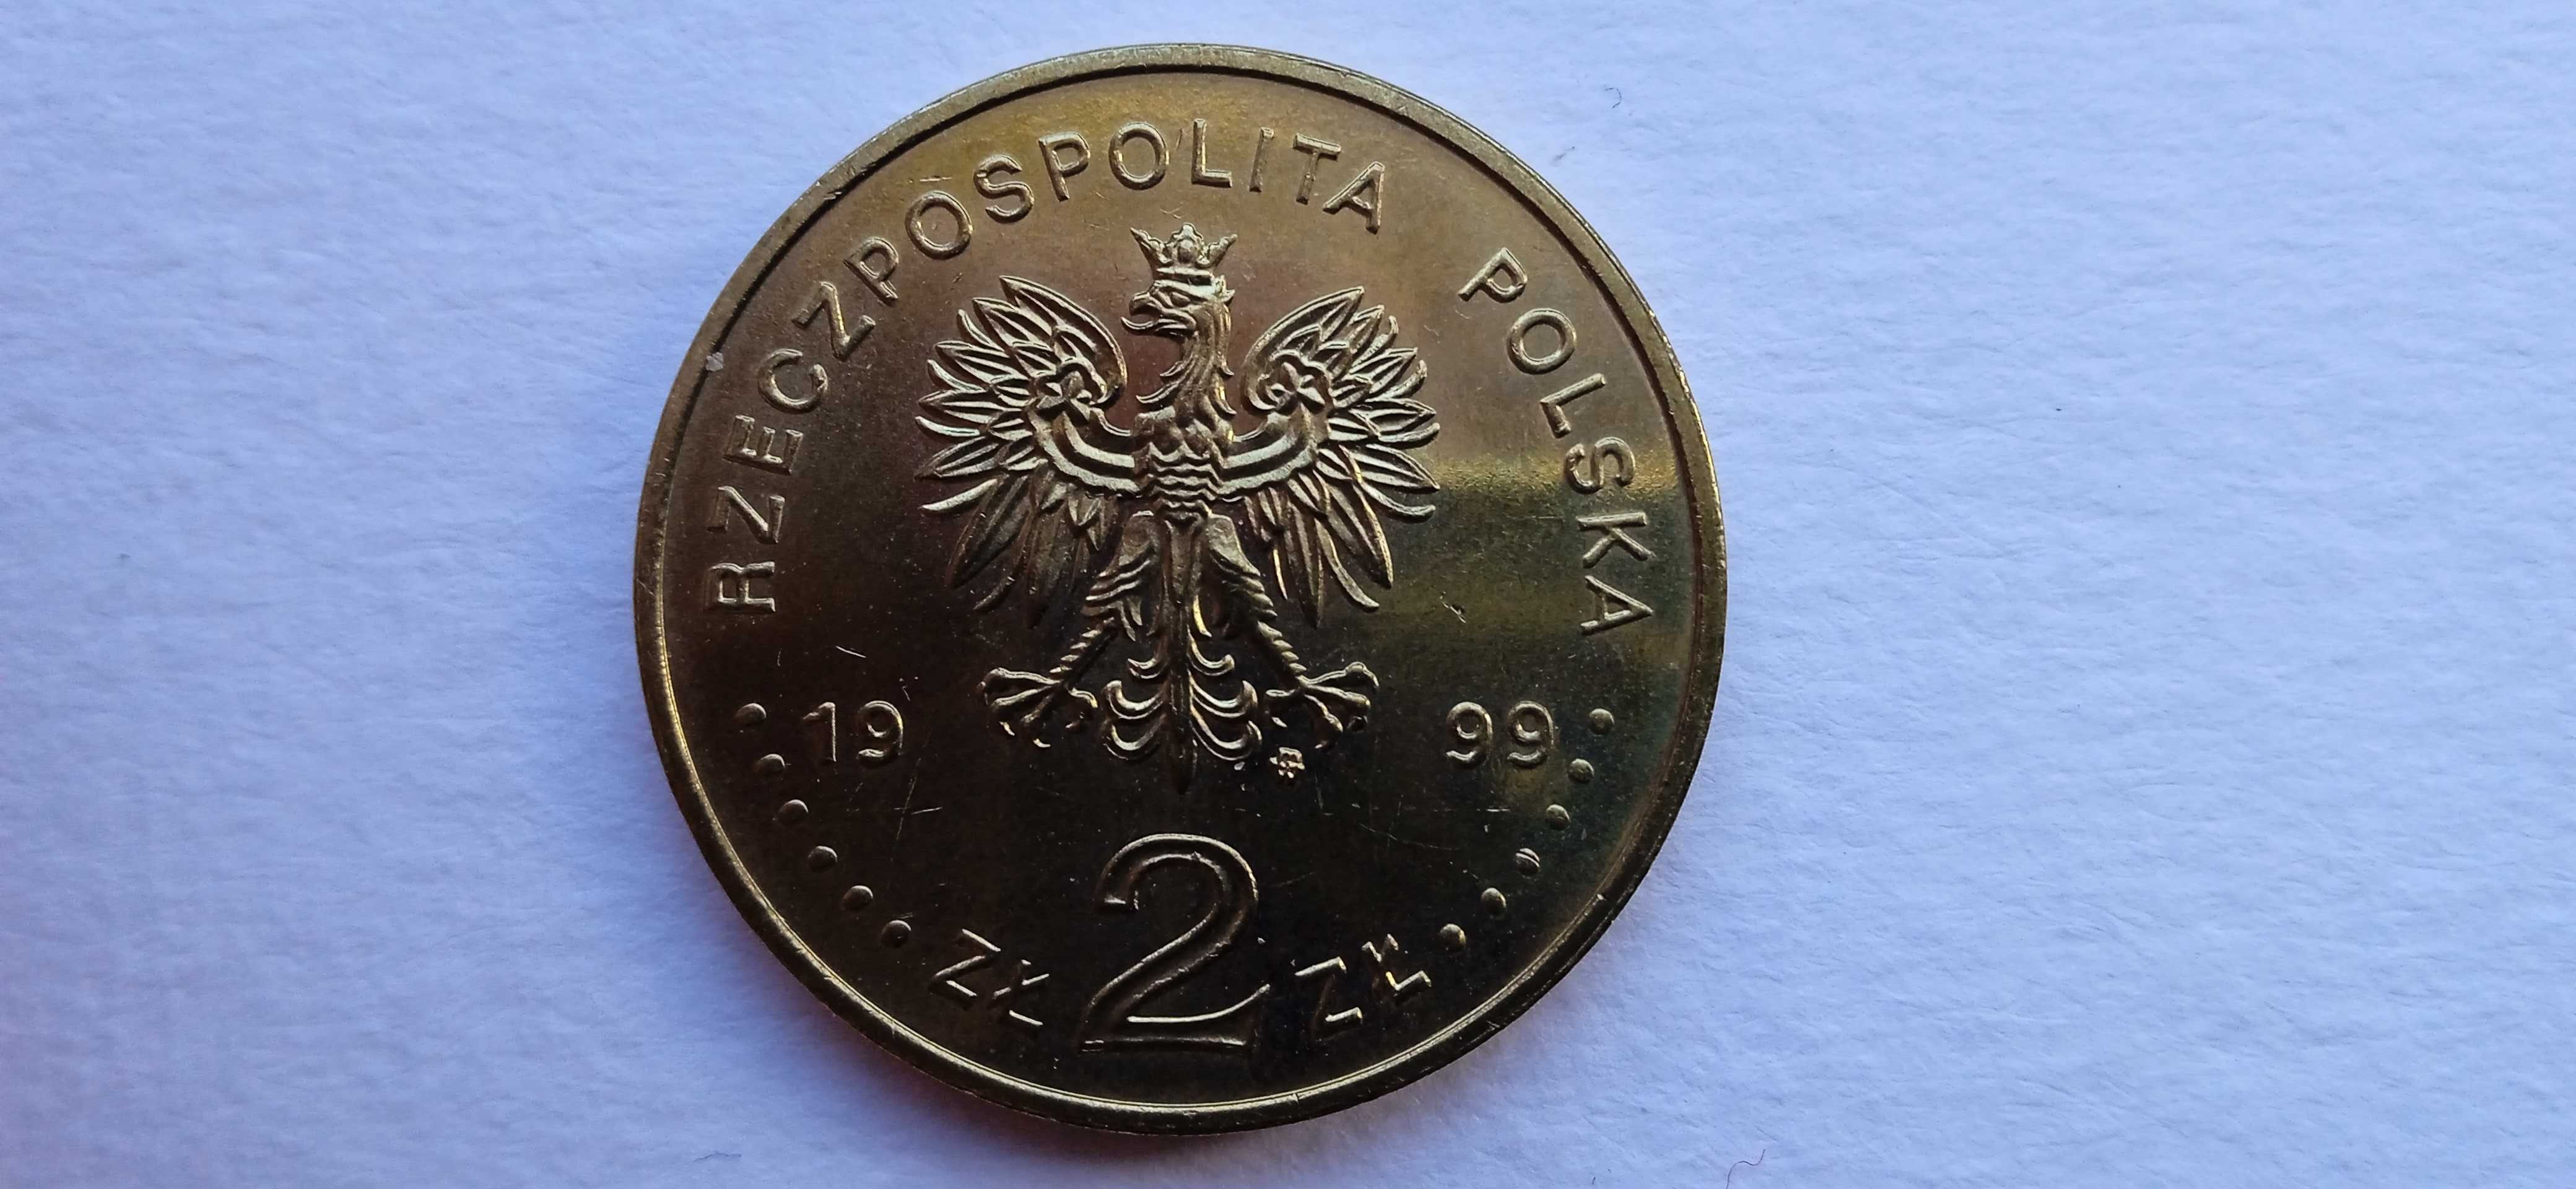 Moneta 2zł Ernest Malinowski  1999 rok.